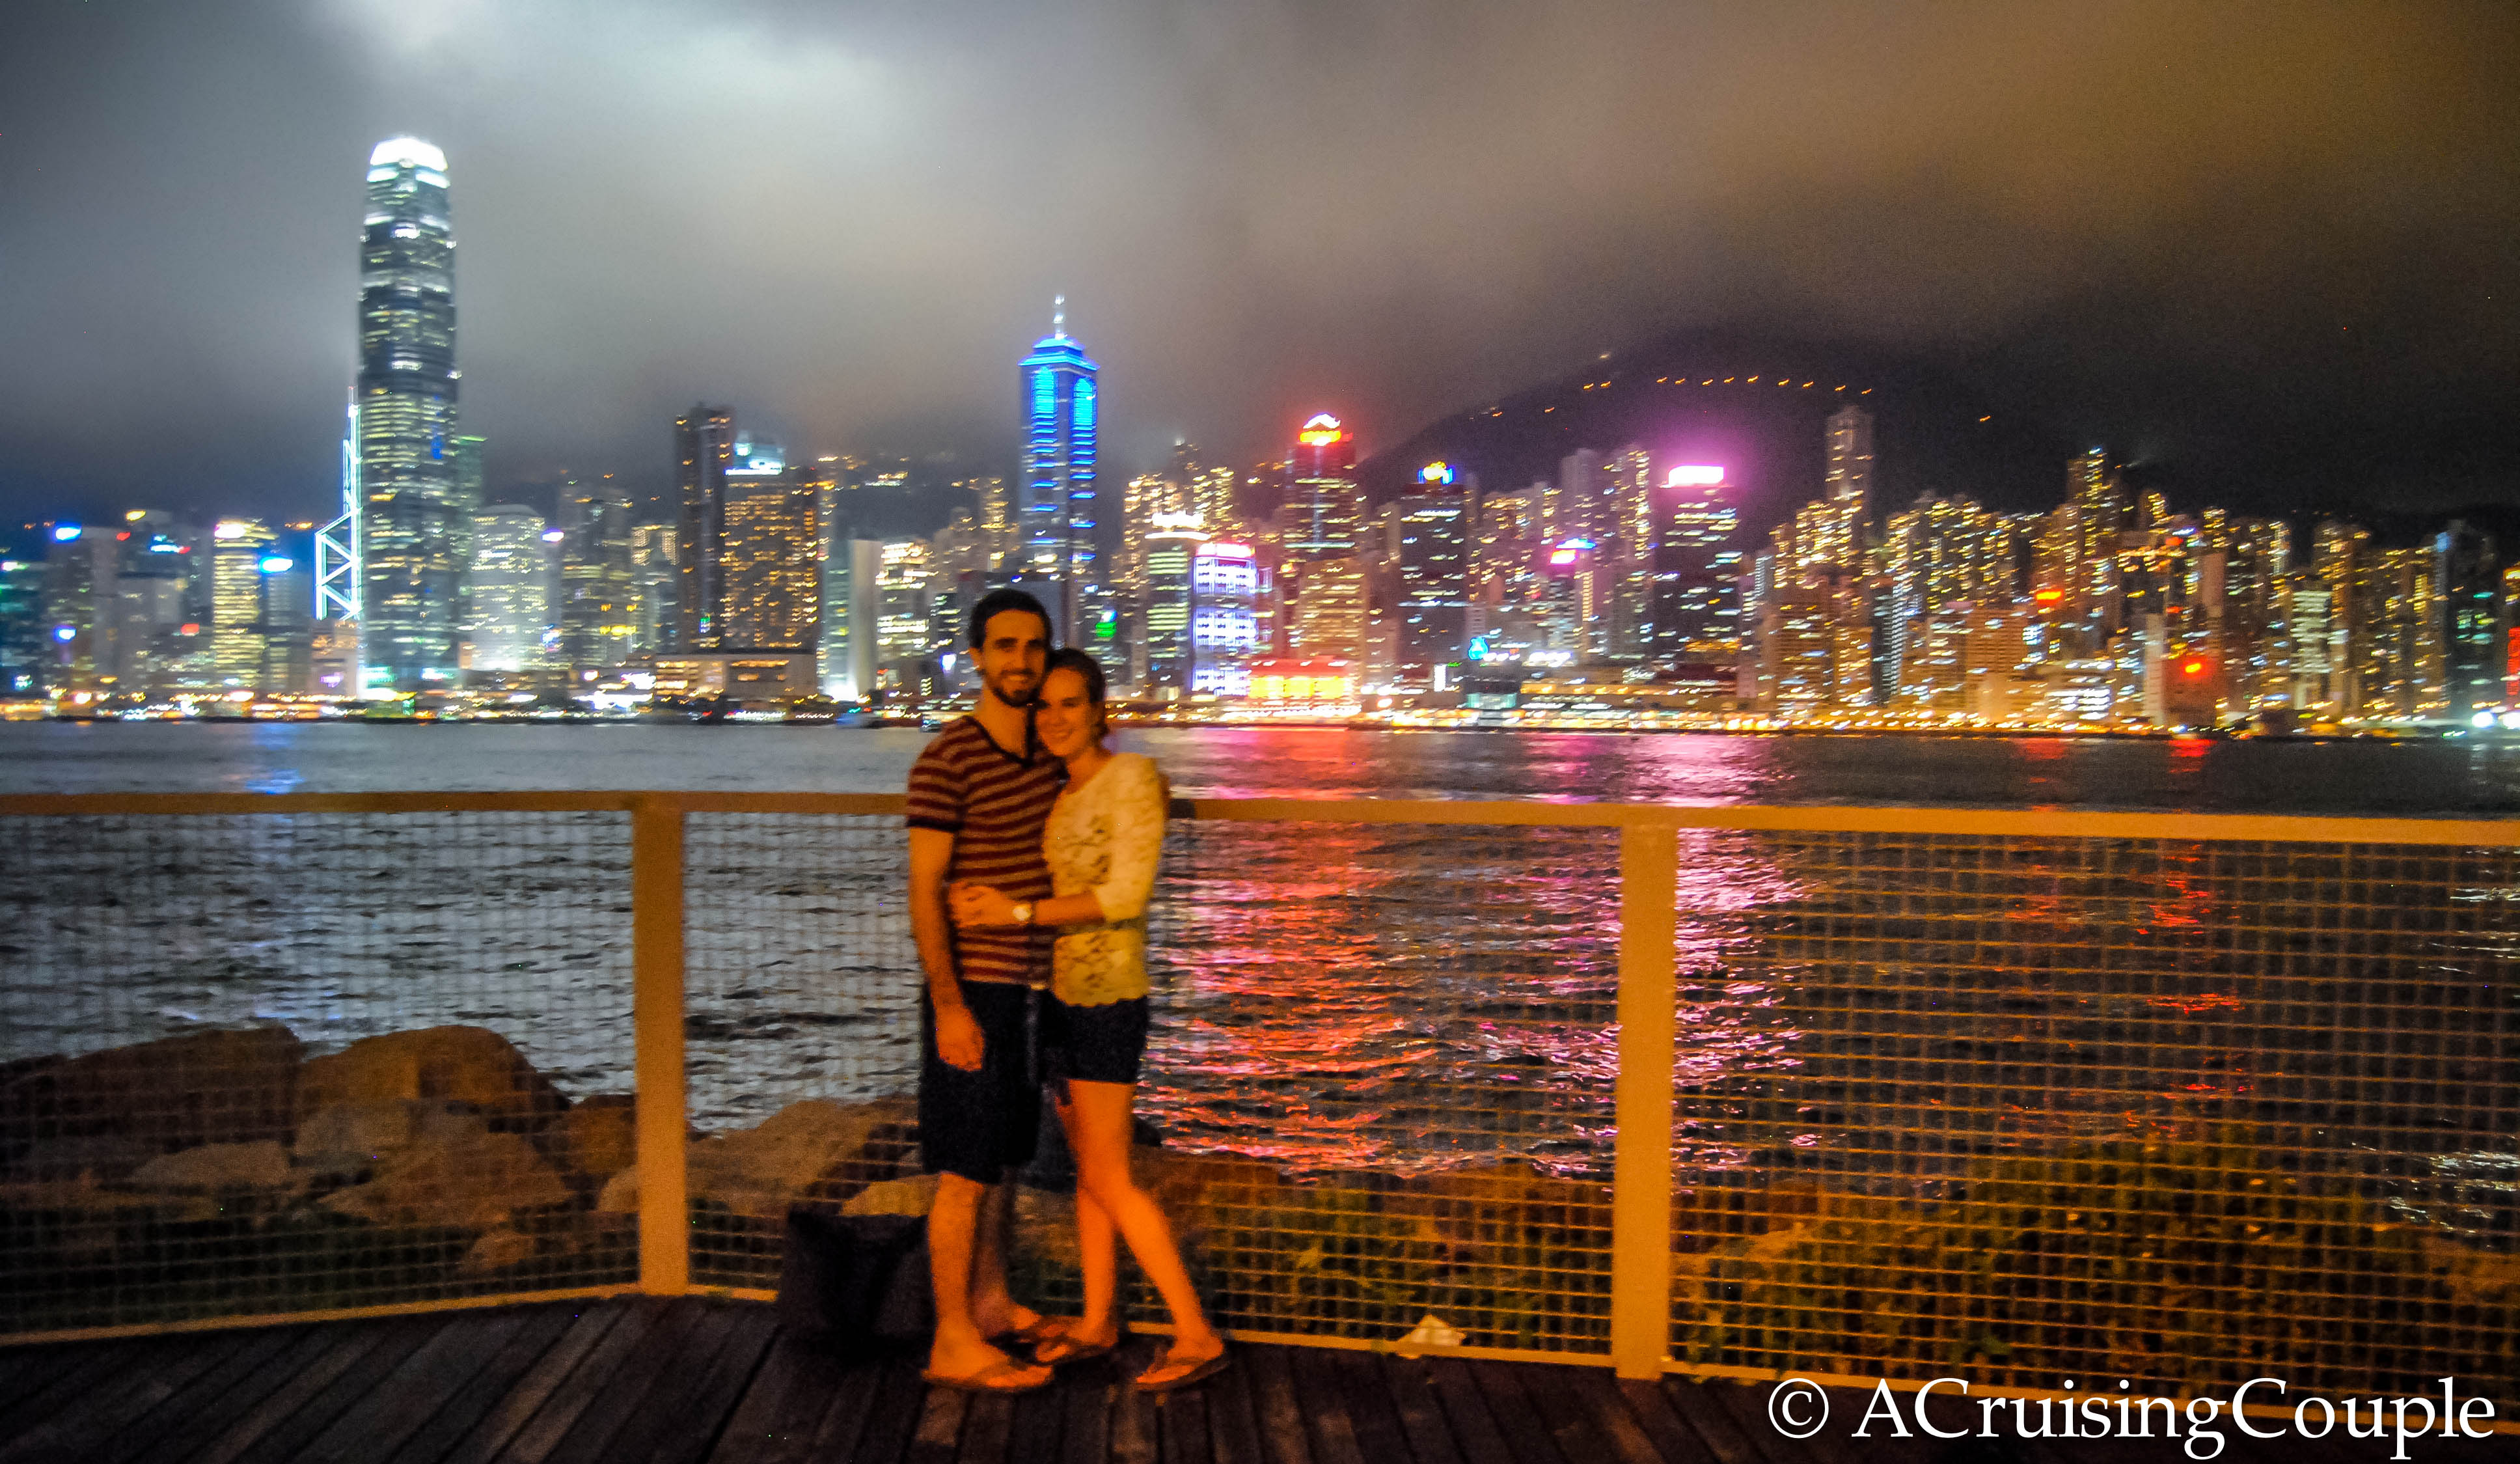 Hong Kong Skyline: 6 Ways to Photograph the Hong Kong Skyline - A ...